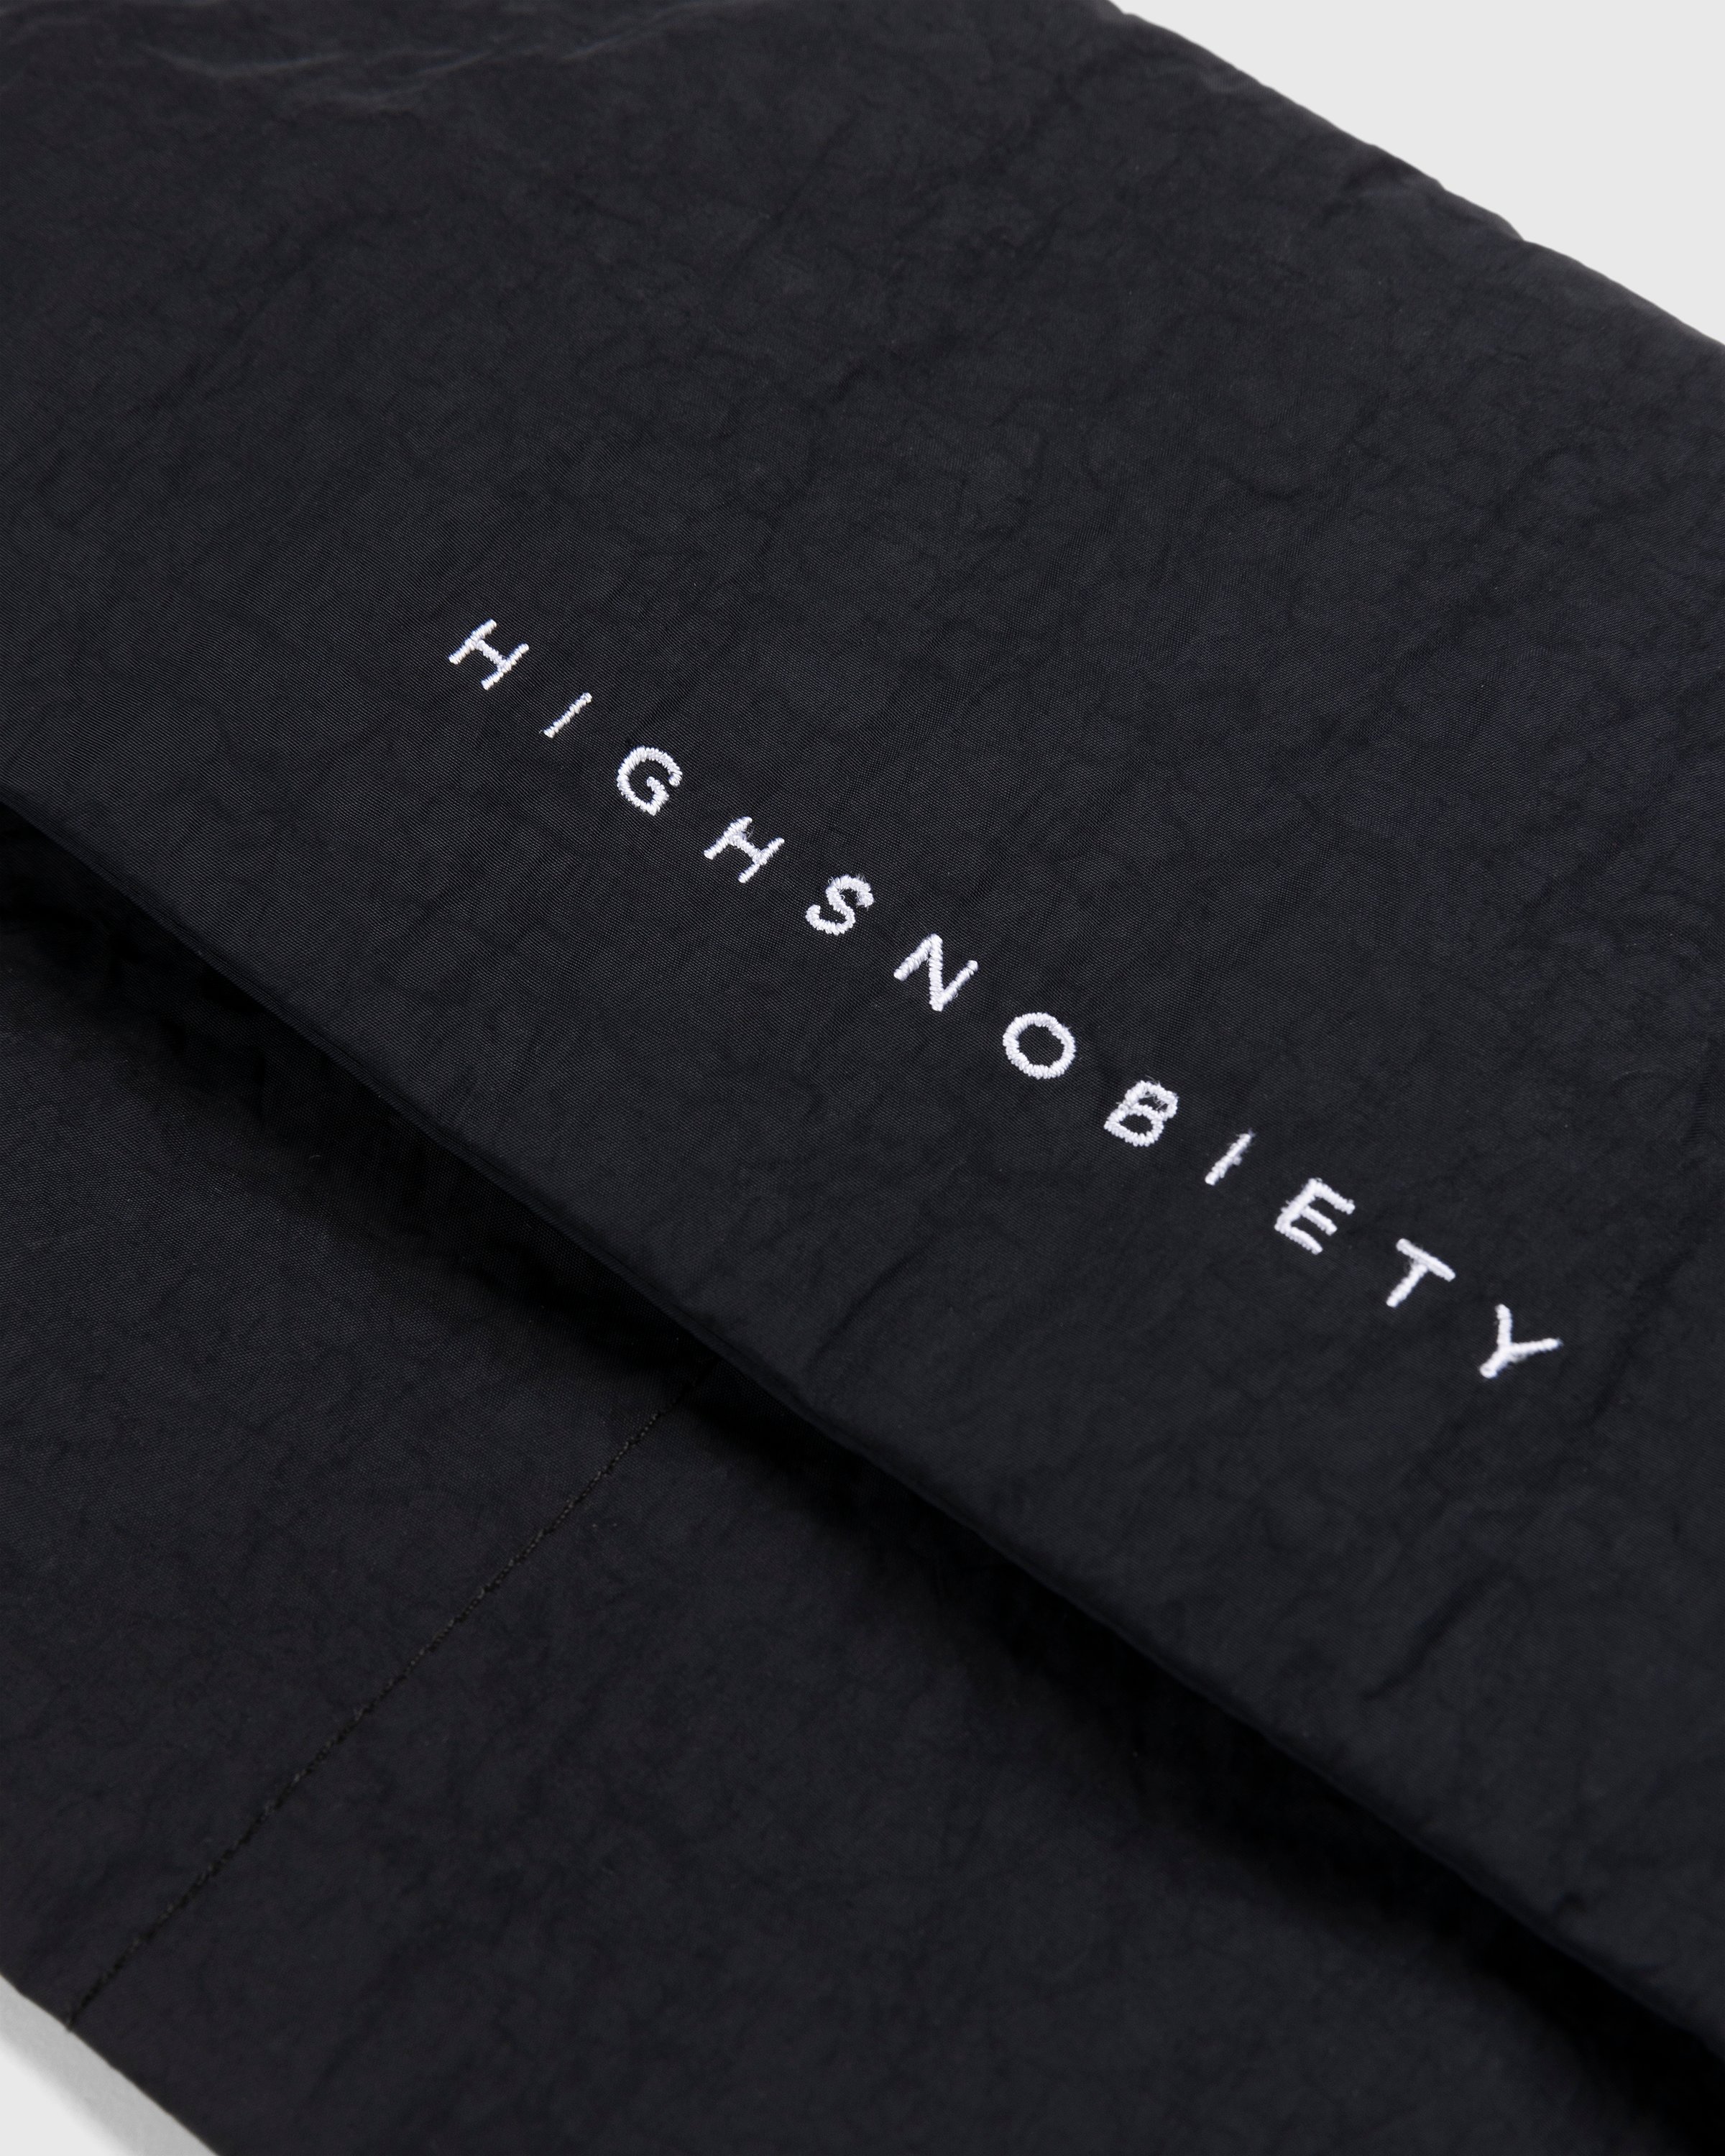 Highsnobiety - Nylon Side Bag Black - Accessories - Black - Image 5